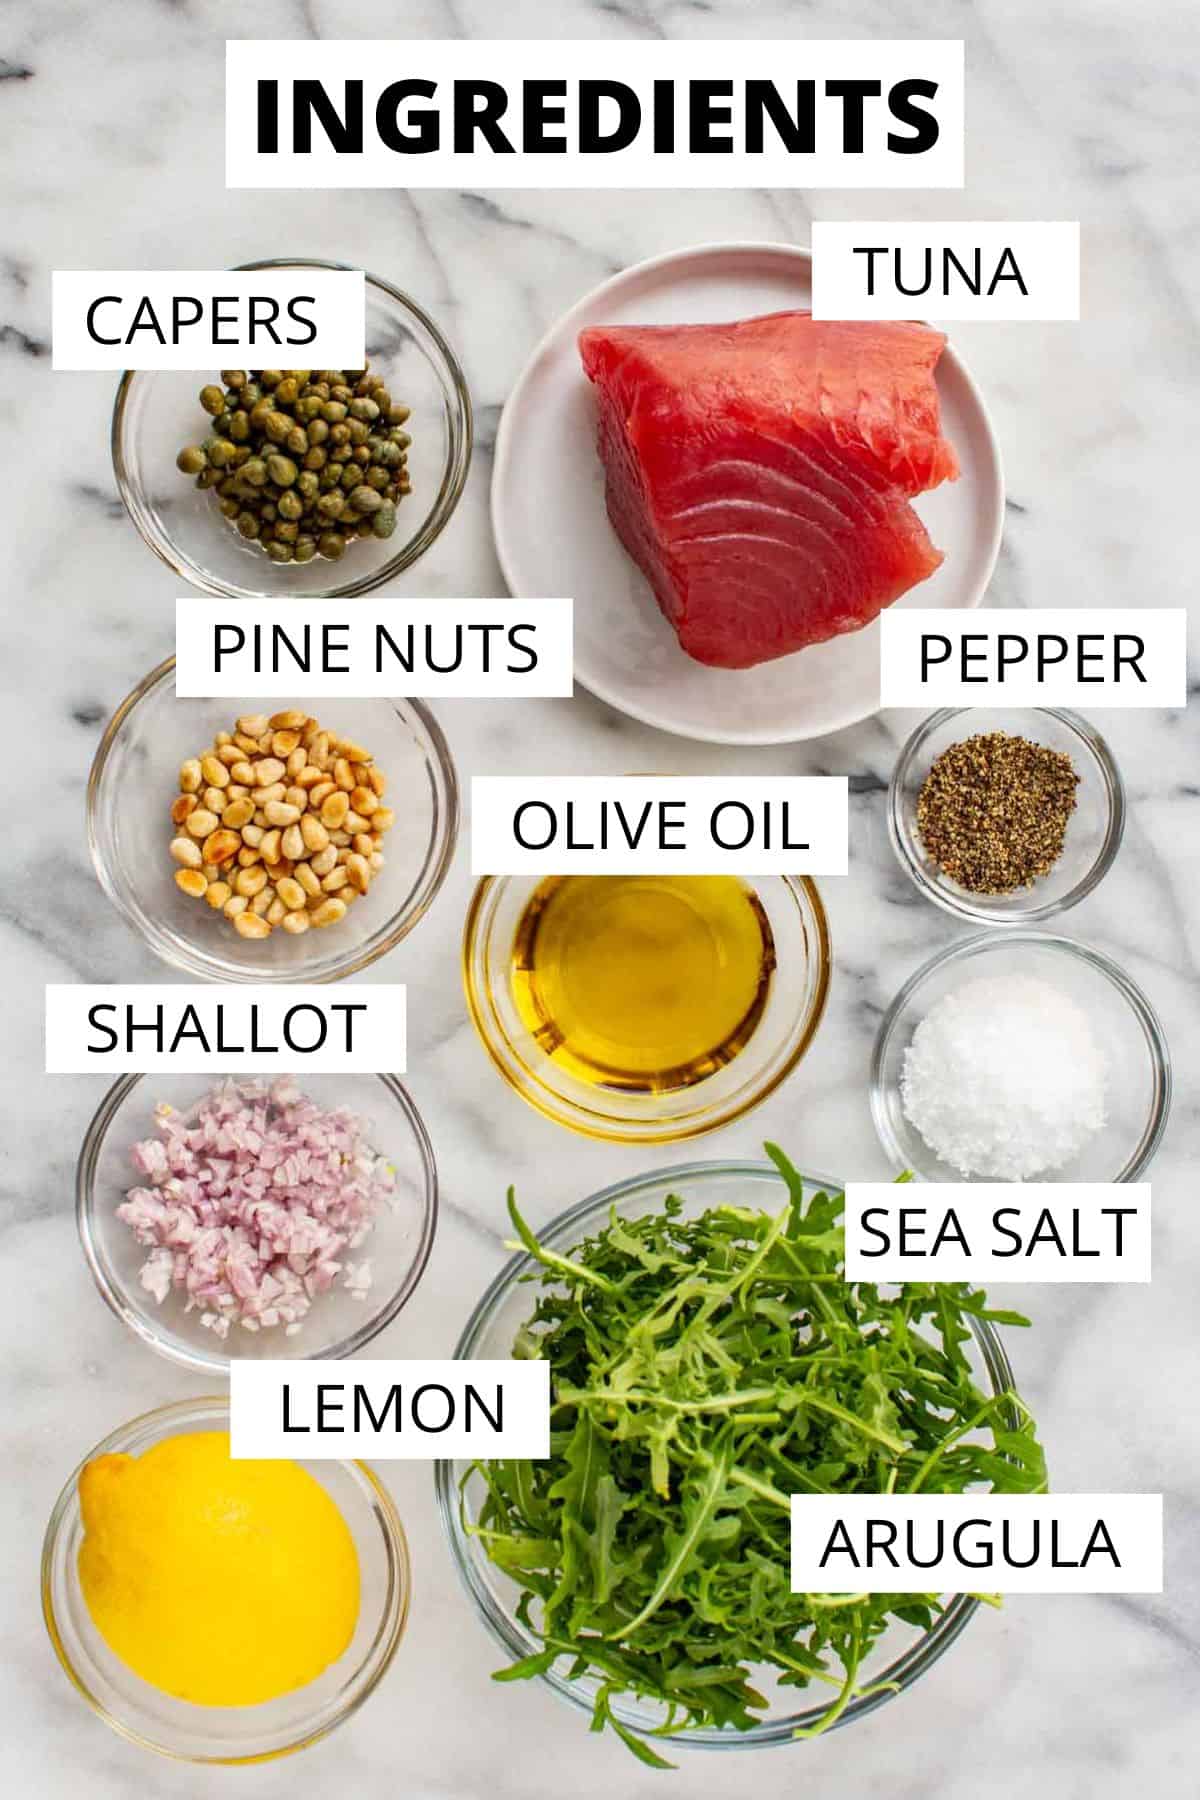 Ingredients for tuna carpaccio. 